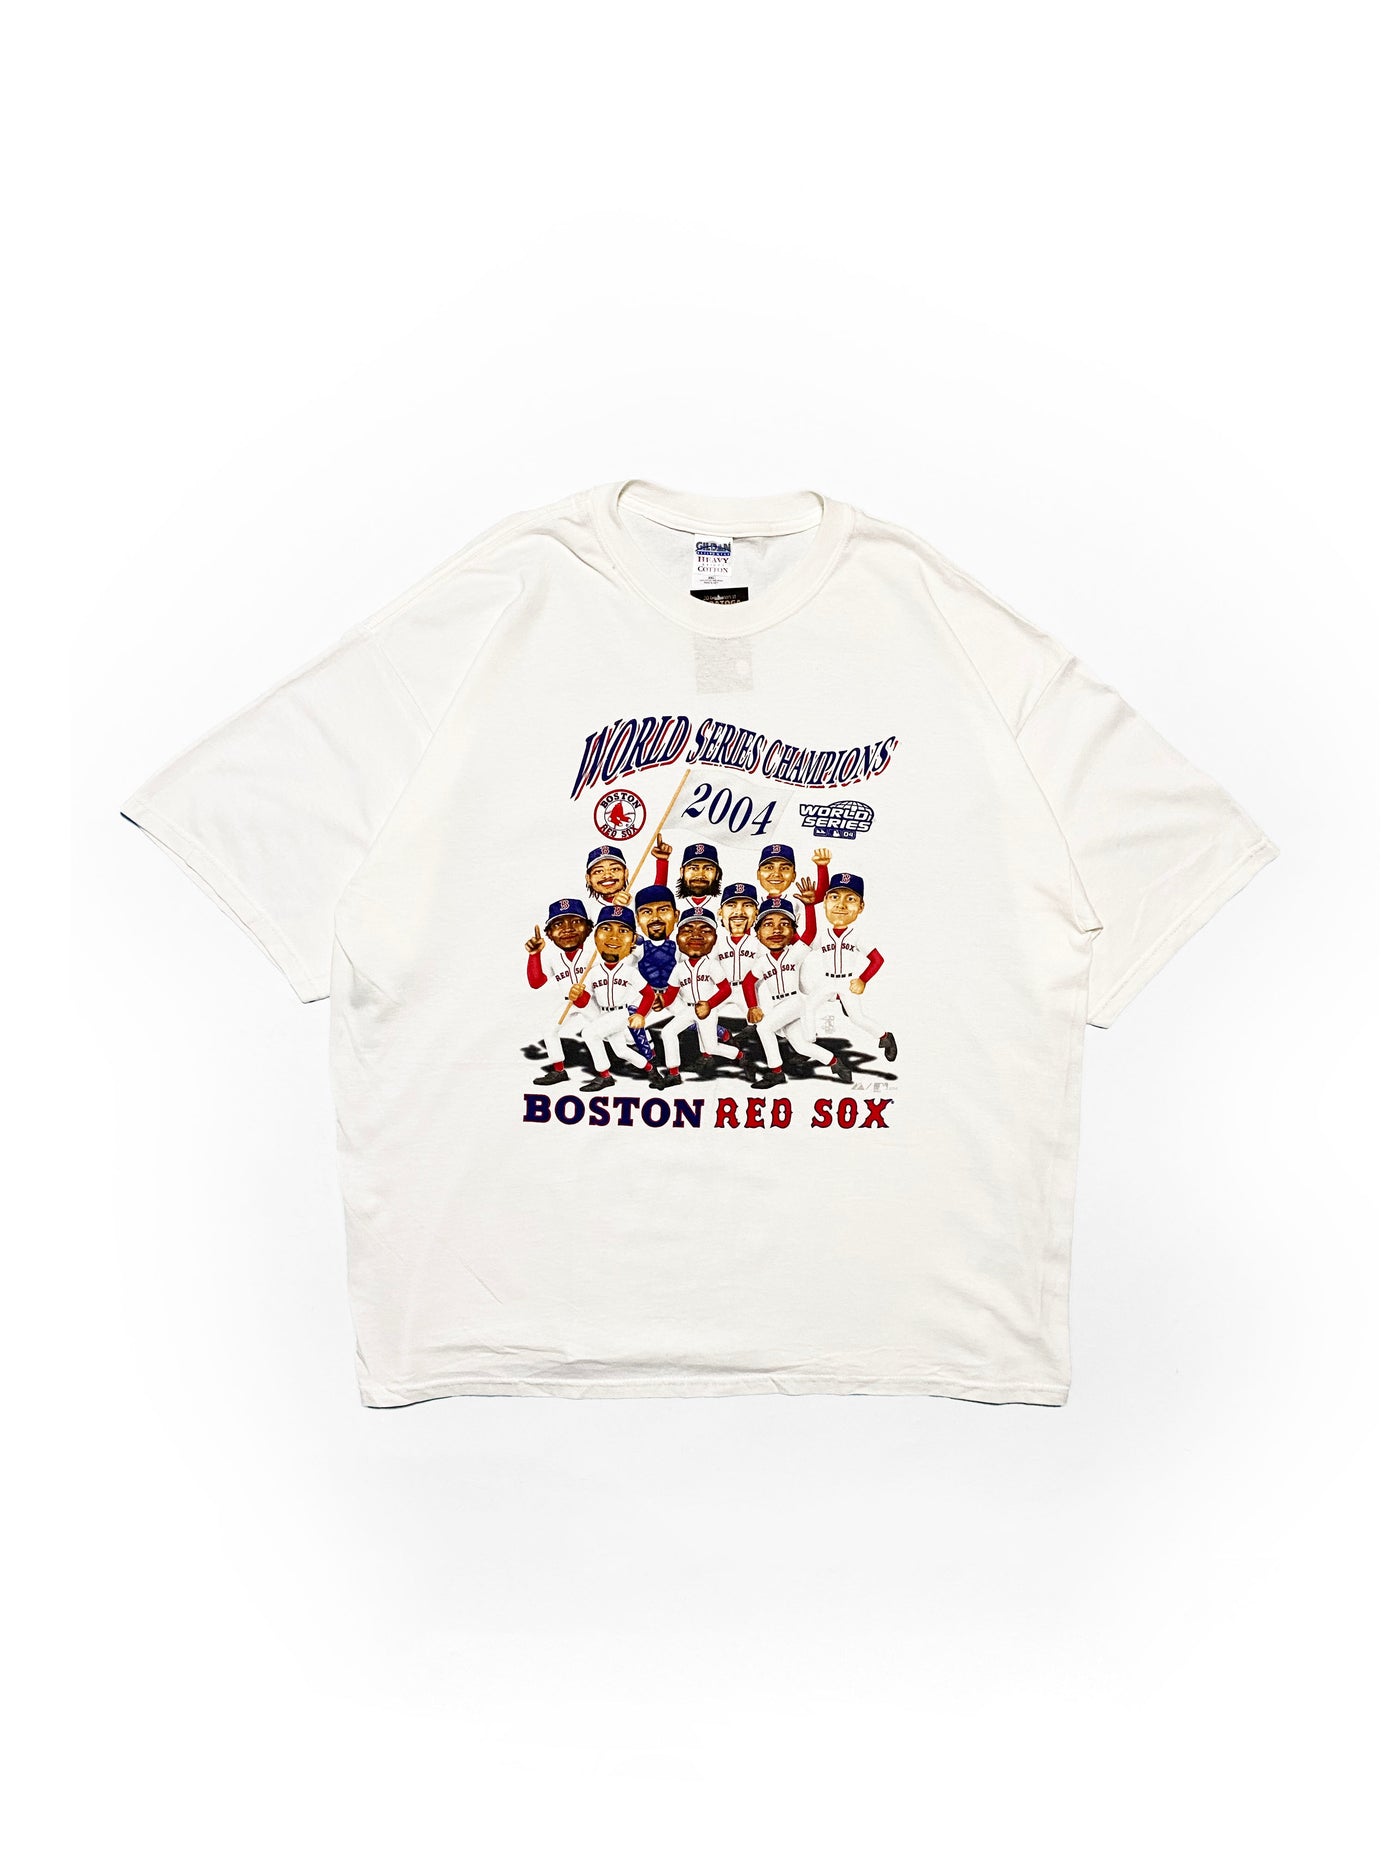 2004 Boston Red Sox World Champions Caricature T-Shirt